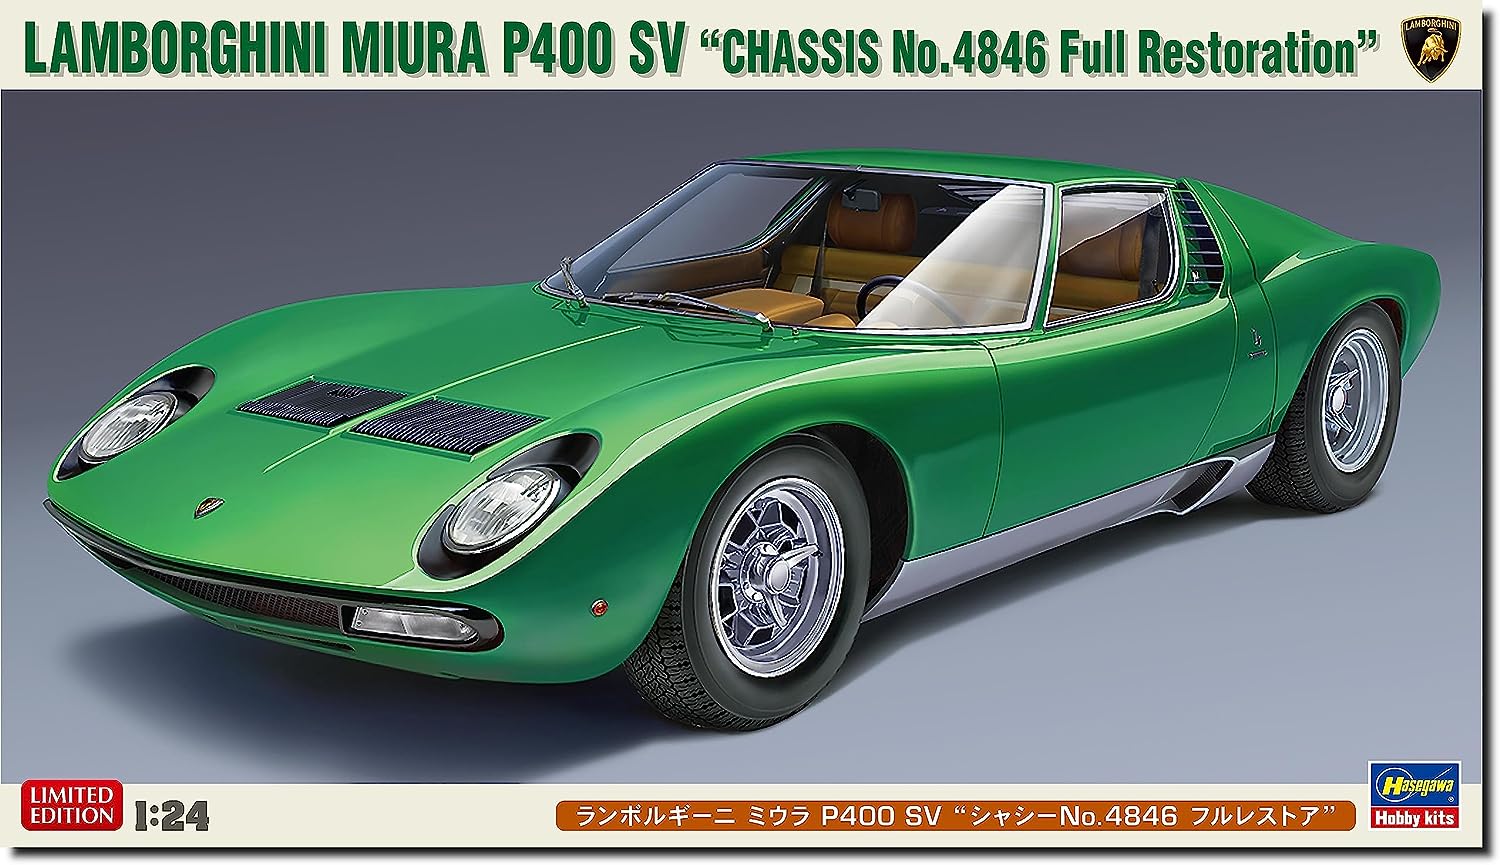 Hasegawa 20652 1/24 Lamborghini Miura P400 SV Chassis No. 4846 Full Restoration - BanzaiHobby